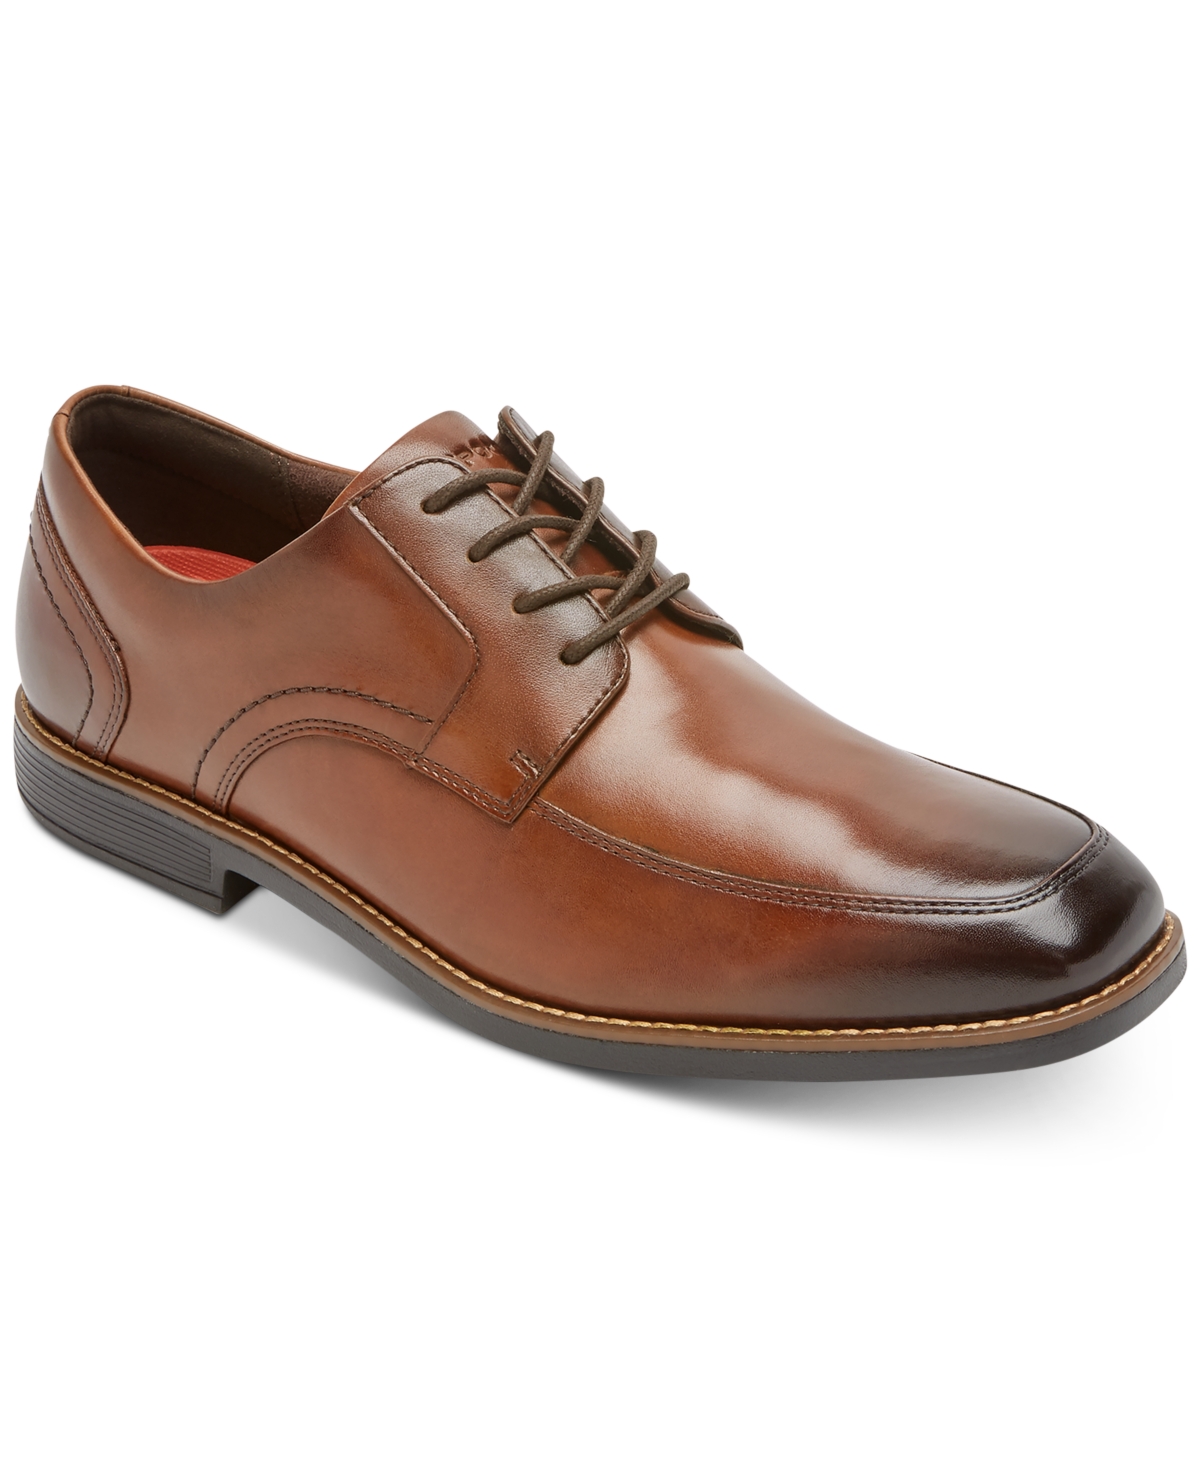 Men's Slayter Apron Toe Shoes - New Brown Glass